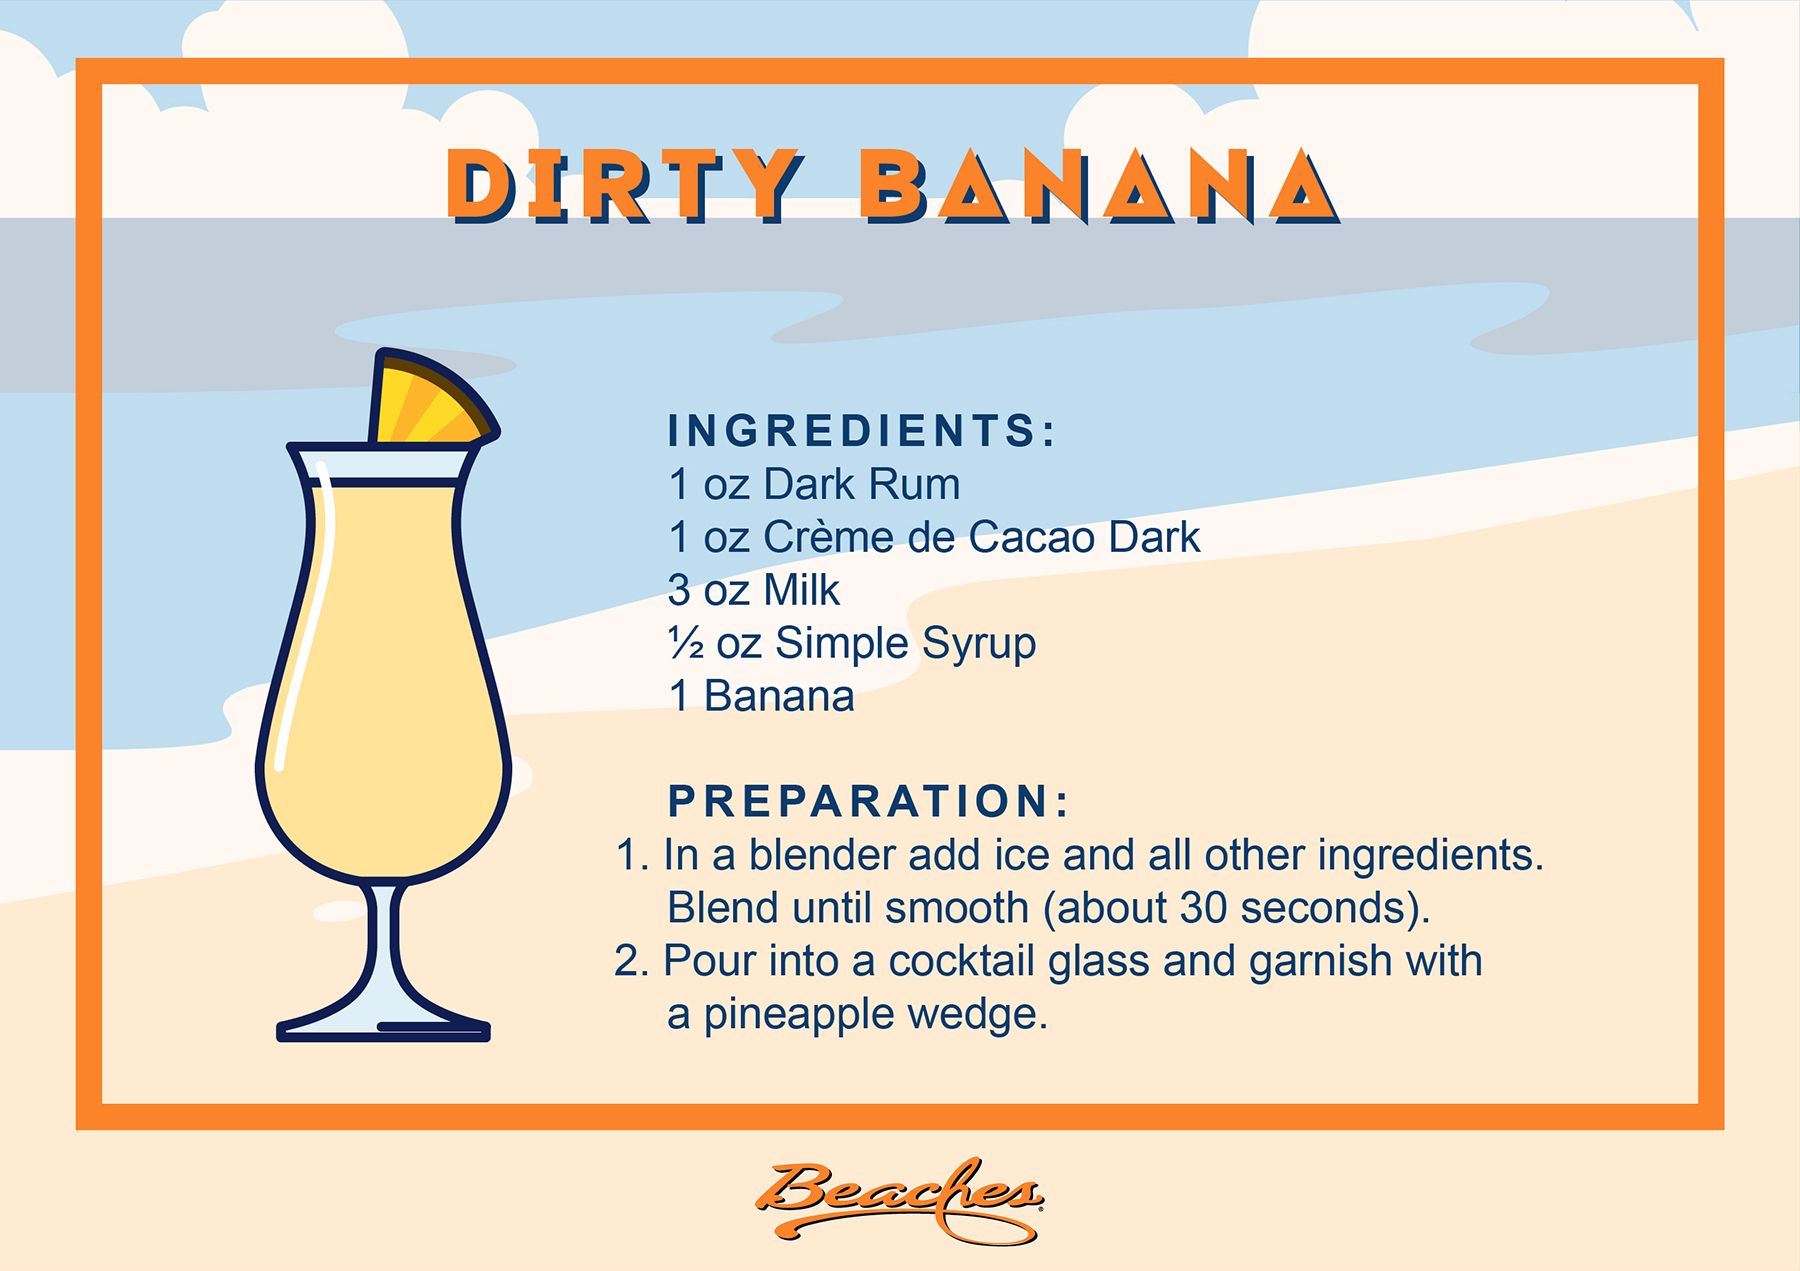 Beaches Cocktail Recipe Cards Dirty Banana